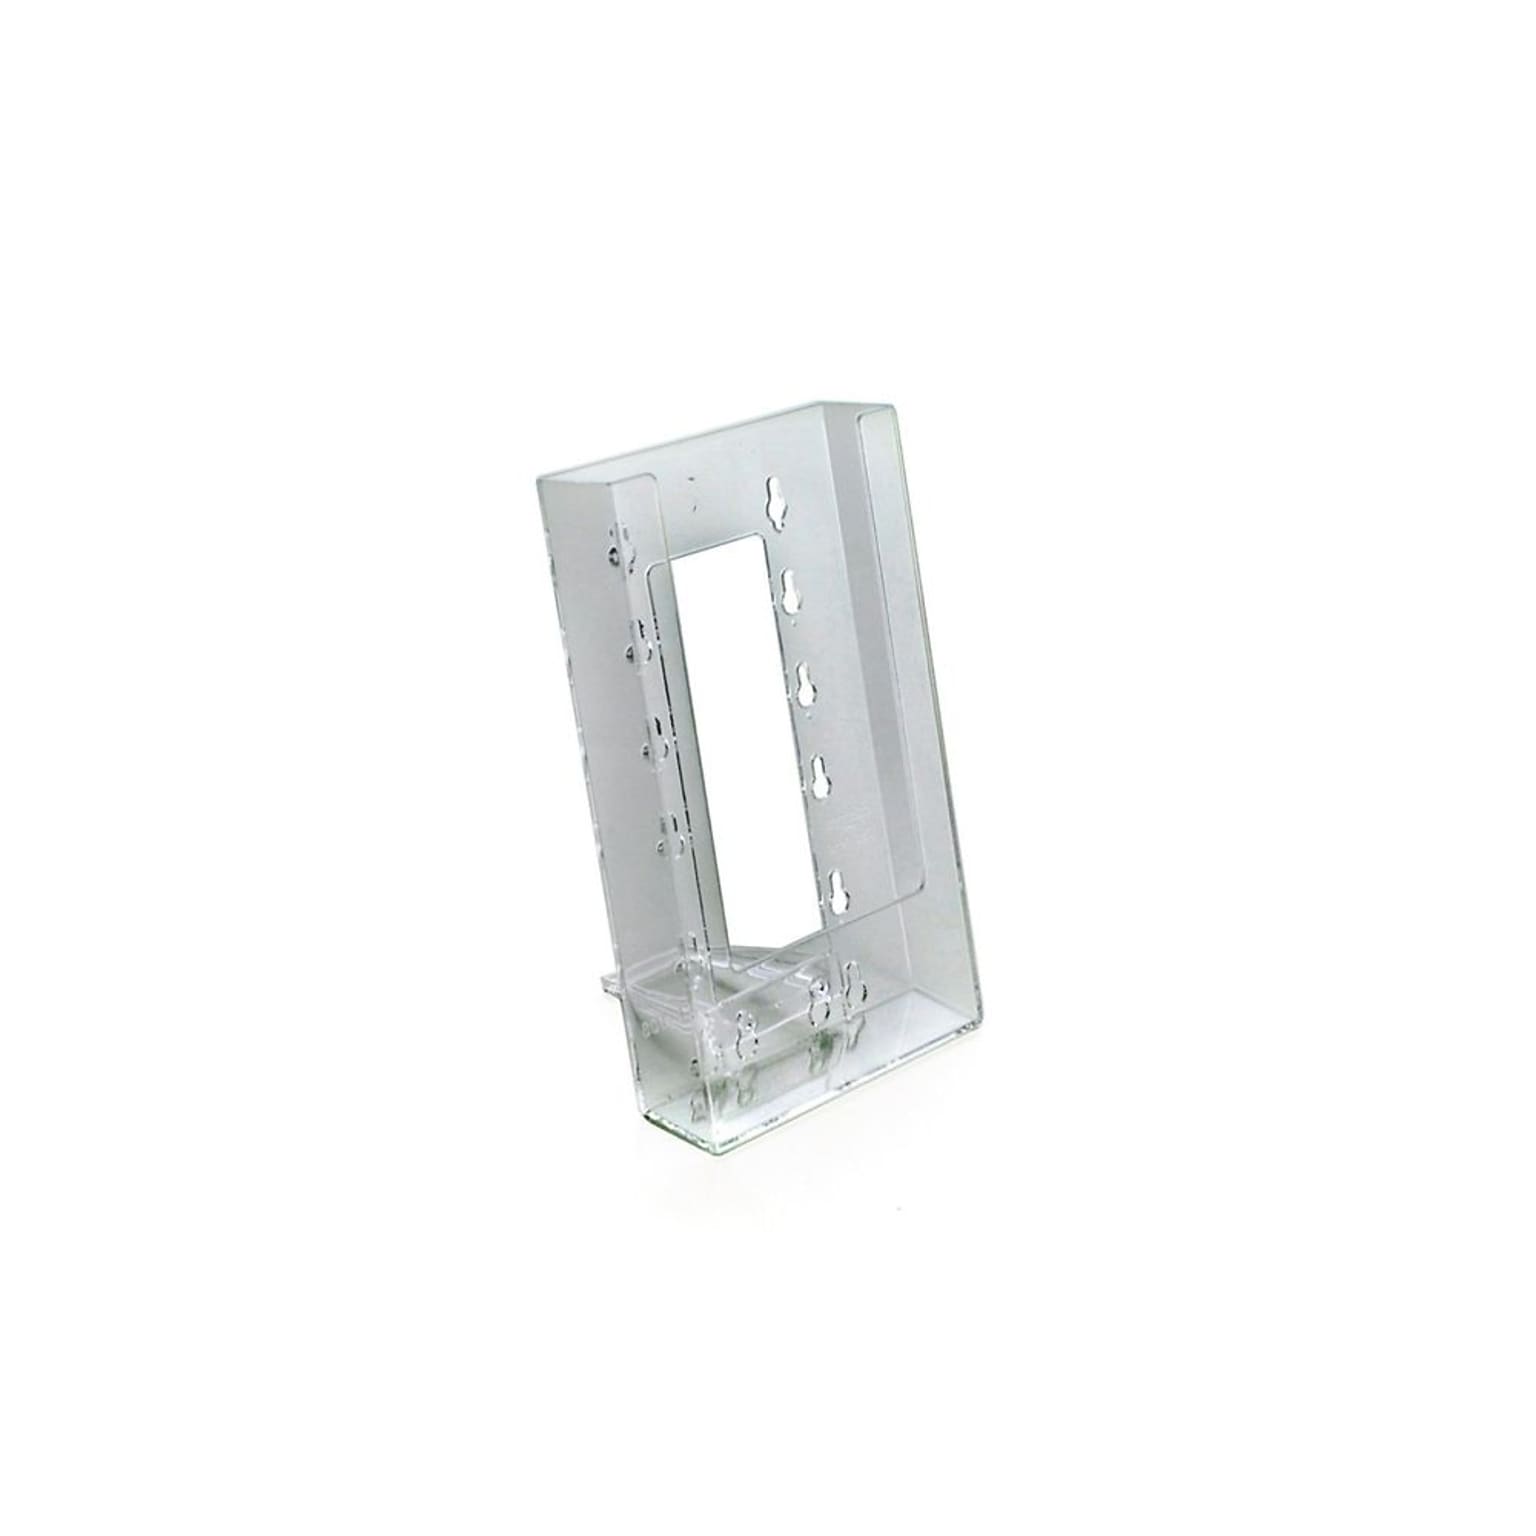 Azar Single Tri-Fold Size Modular Brochure Holder For Counter, 10/Pack (252300)